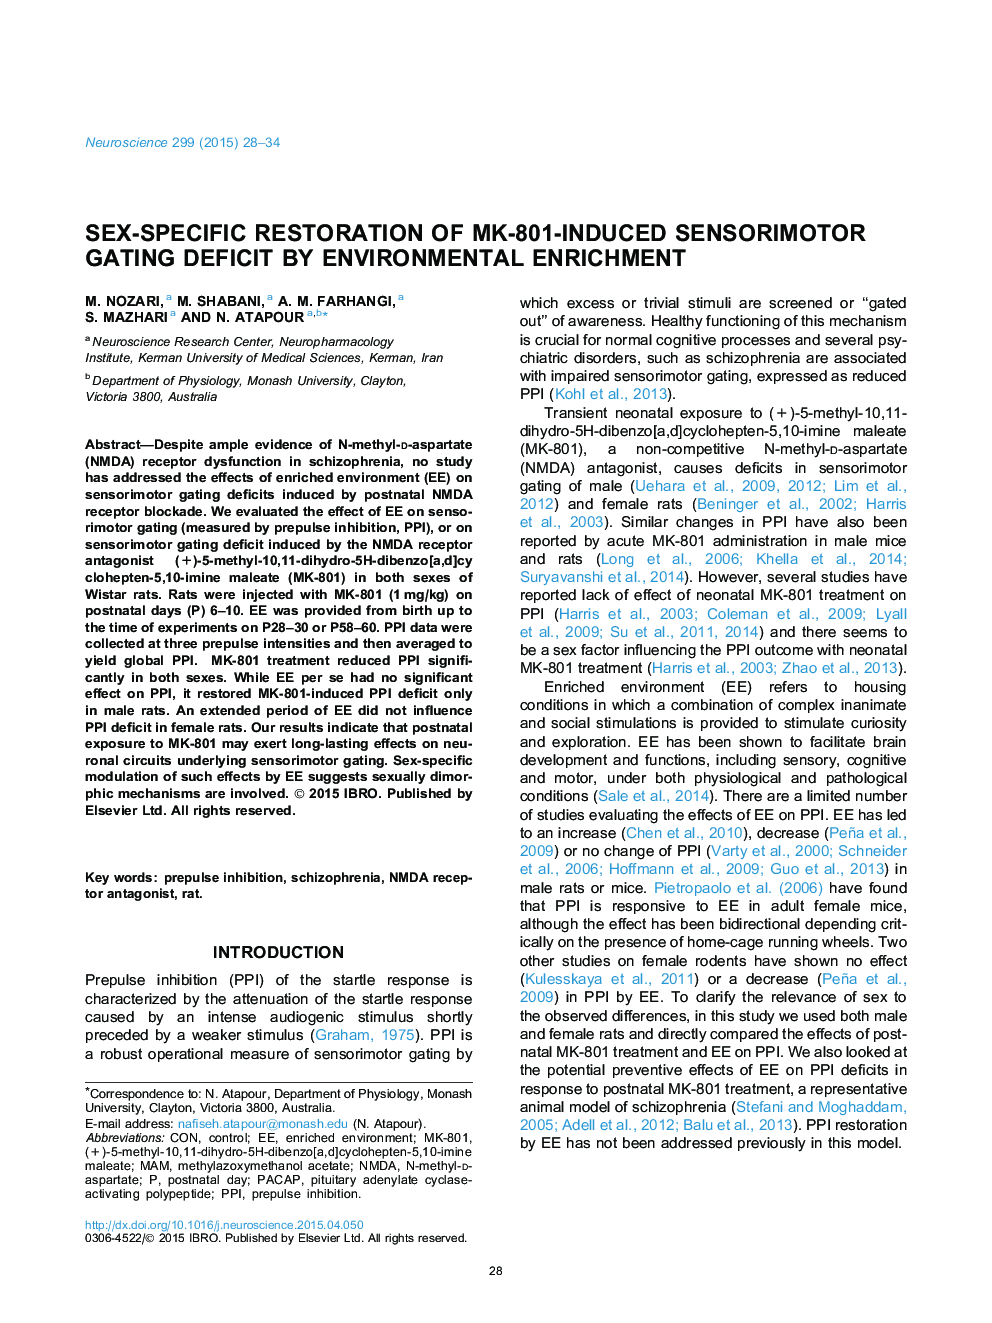 Sex-specific restoration of MK-801-induced sensorimotor gating deficit by environmental enrichment